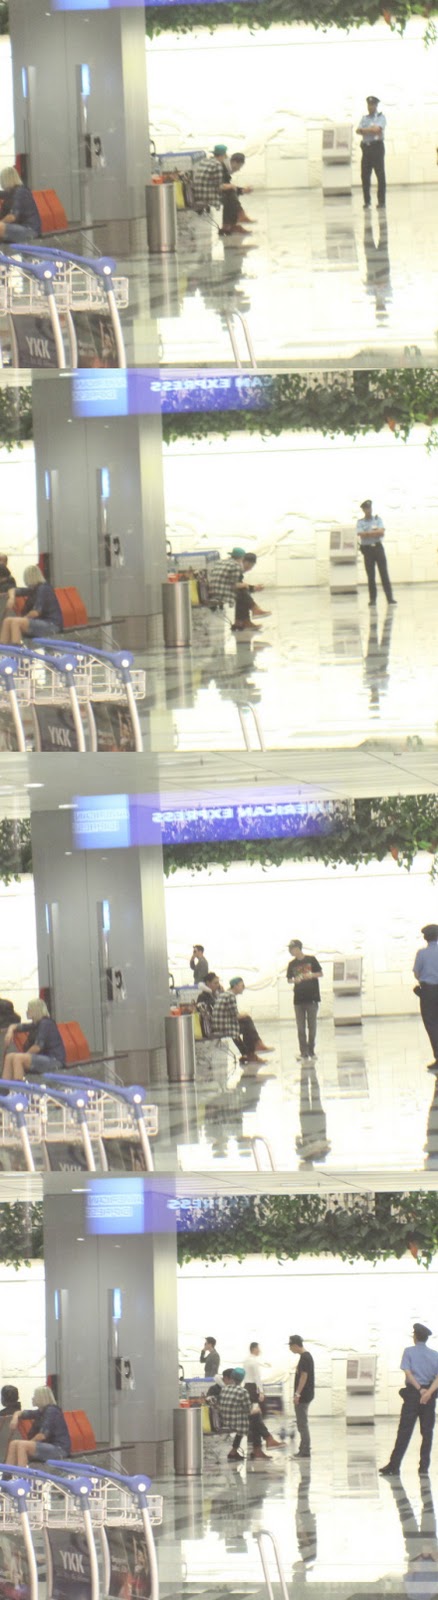 pics - [Pics/vids] Seungri, T.O.P y G-Dragon en el aeropuerto de Changi en Singapur GDTOPVI+CHANGI+4